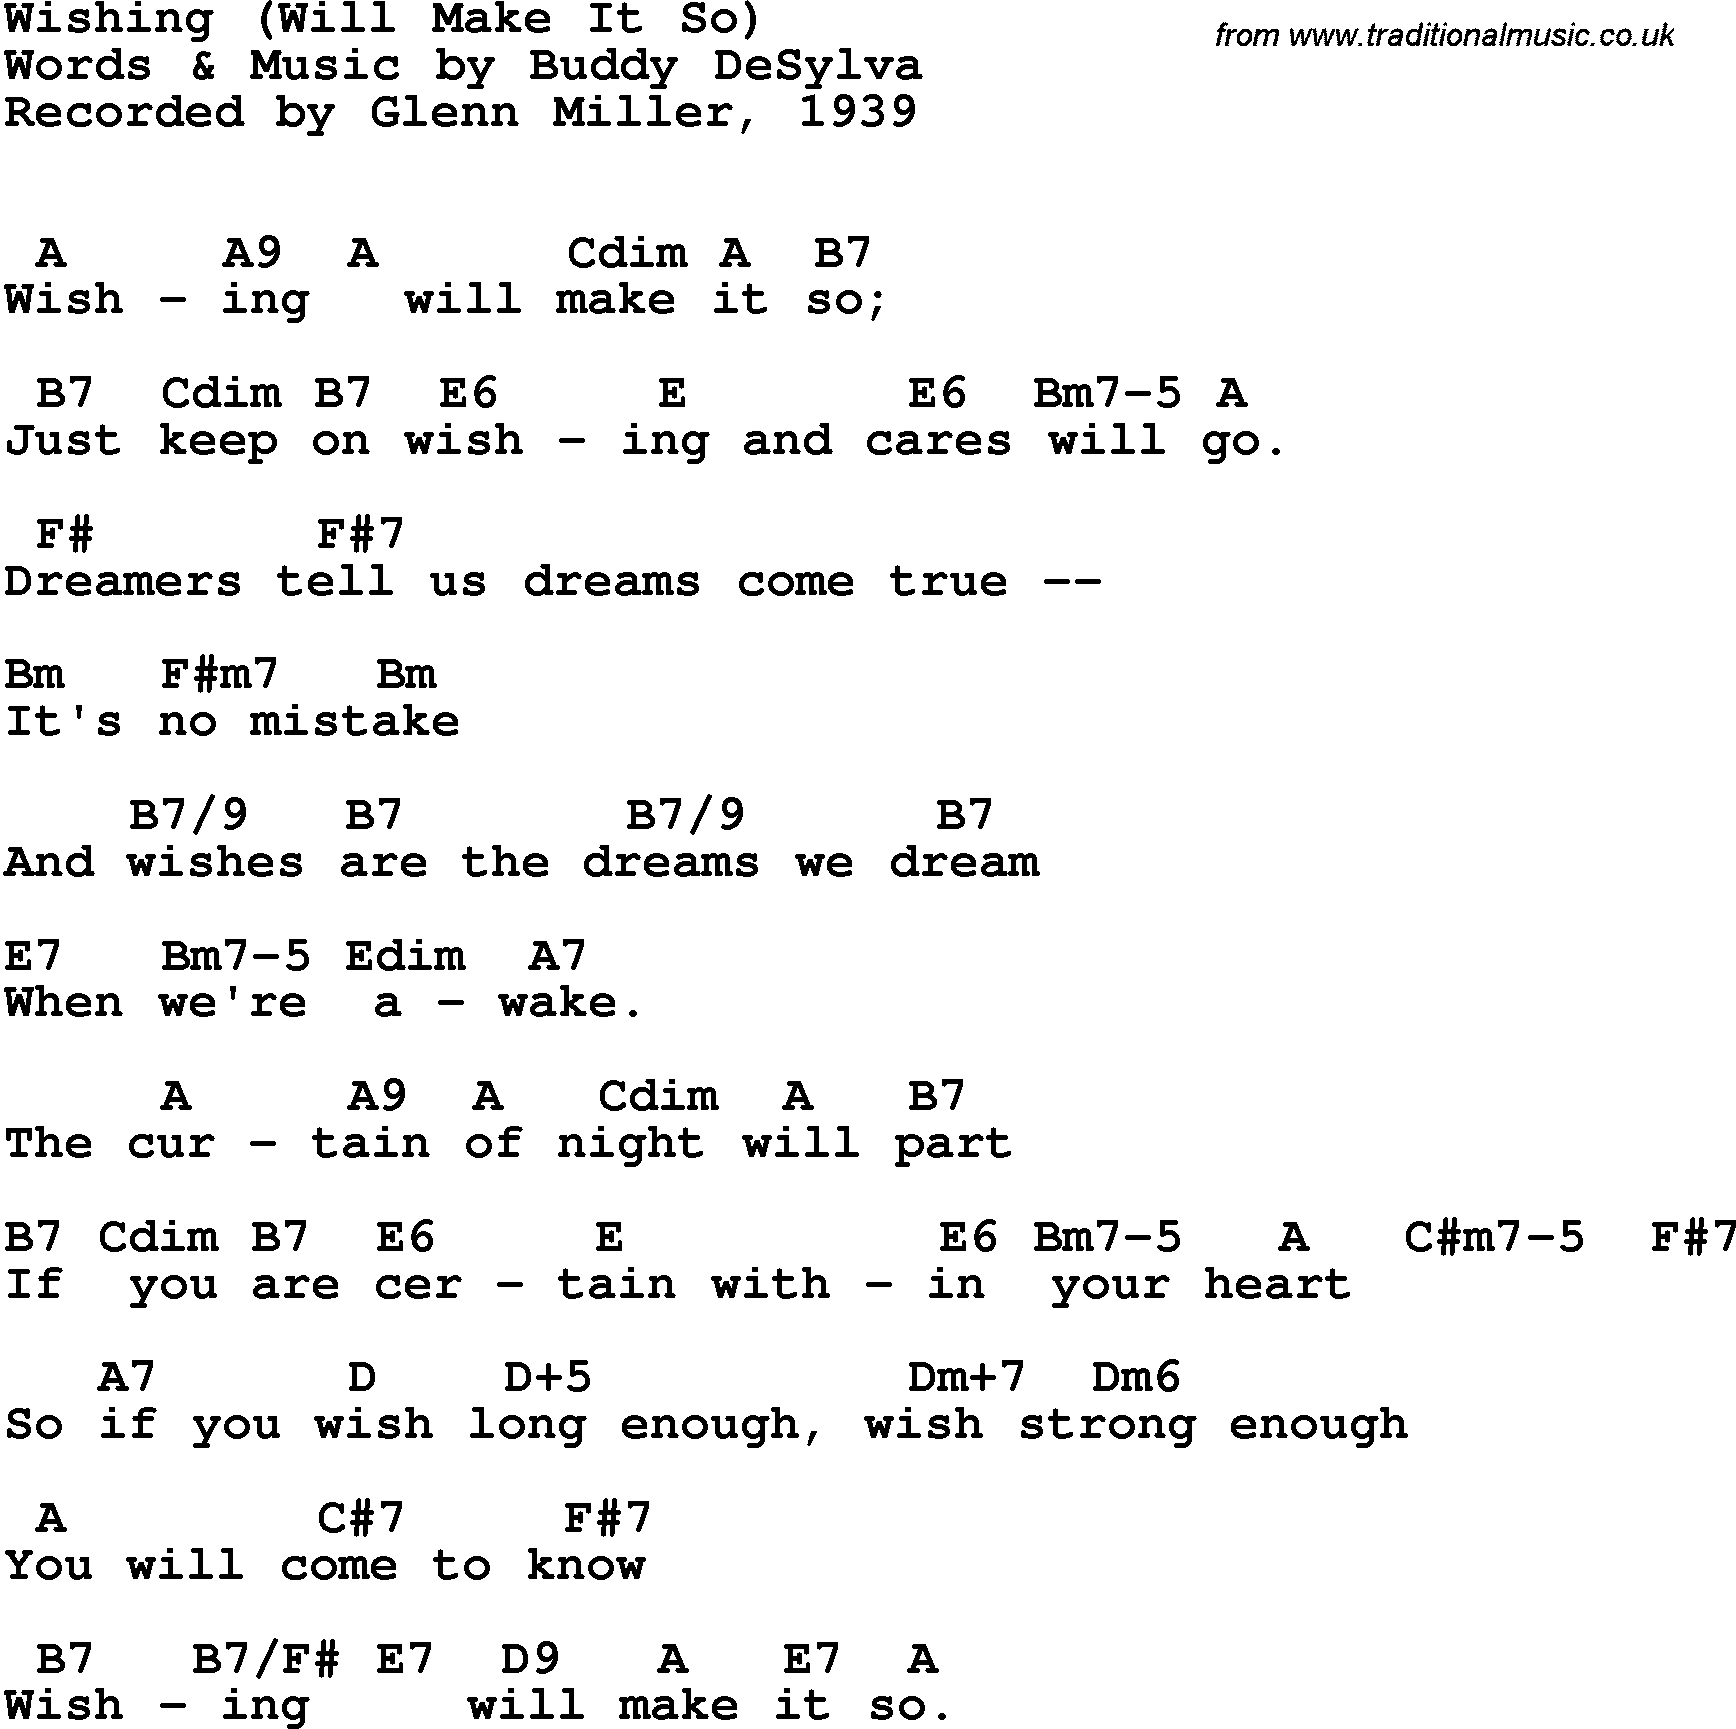 Song Lyrics with guitar chords for Wishing Will Make It So - Glenn Miller, 1939